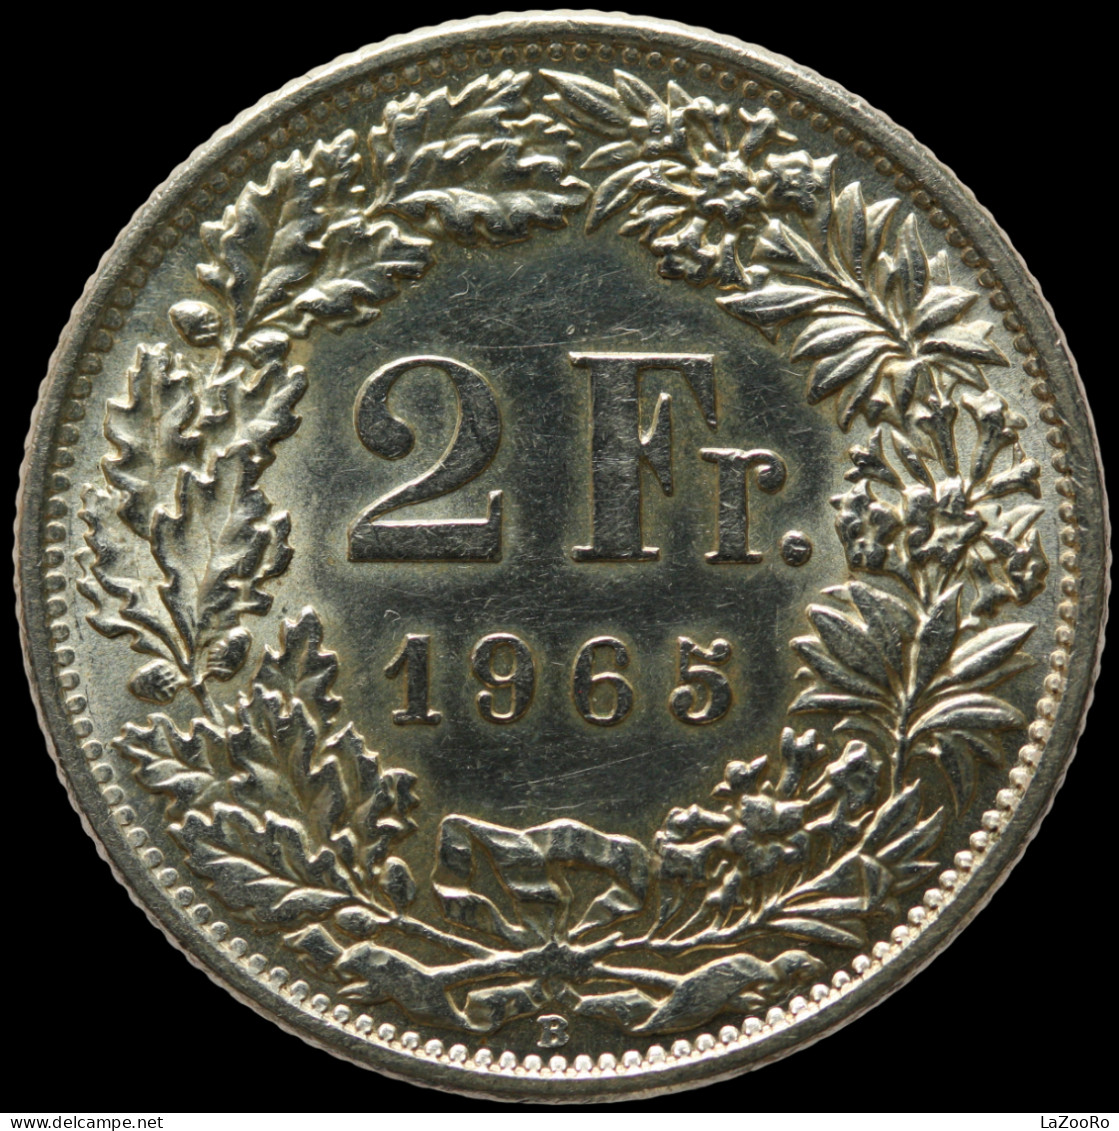 LaZooRo: Switzerland 2 Francs 1965 Specimen - Silver - Essais & Pieforts